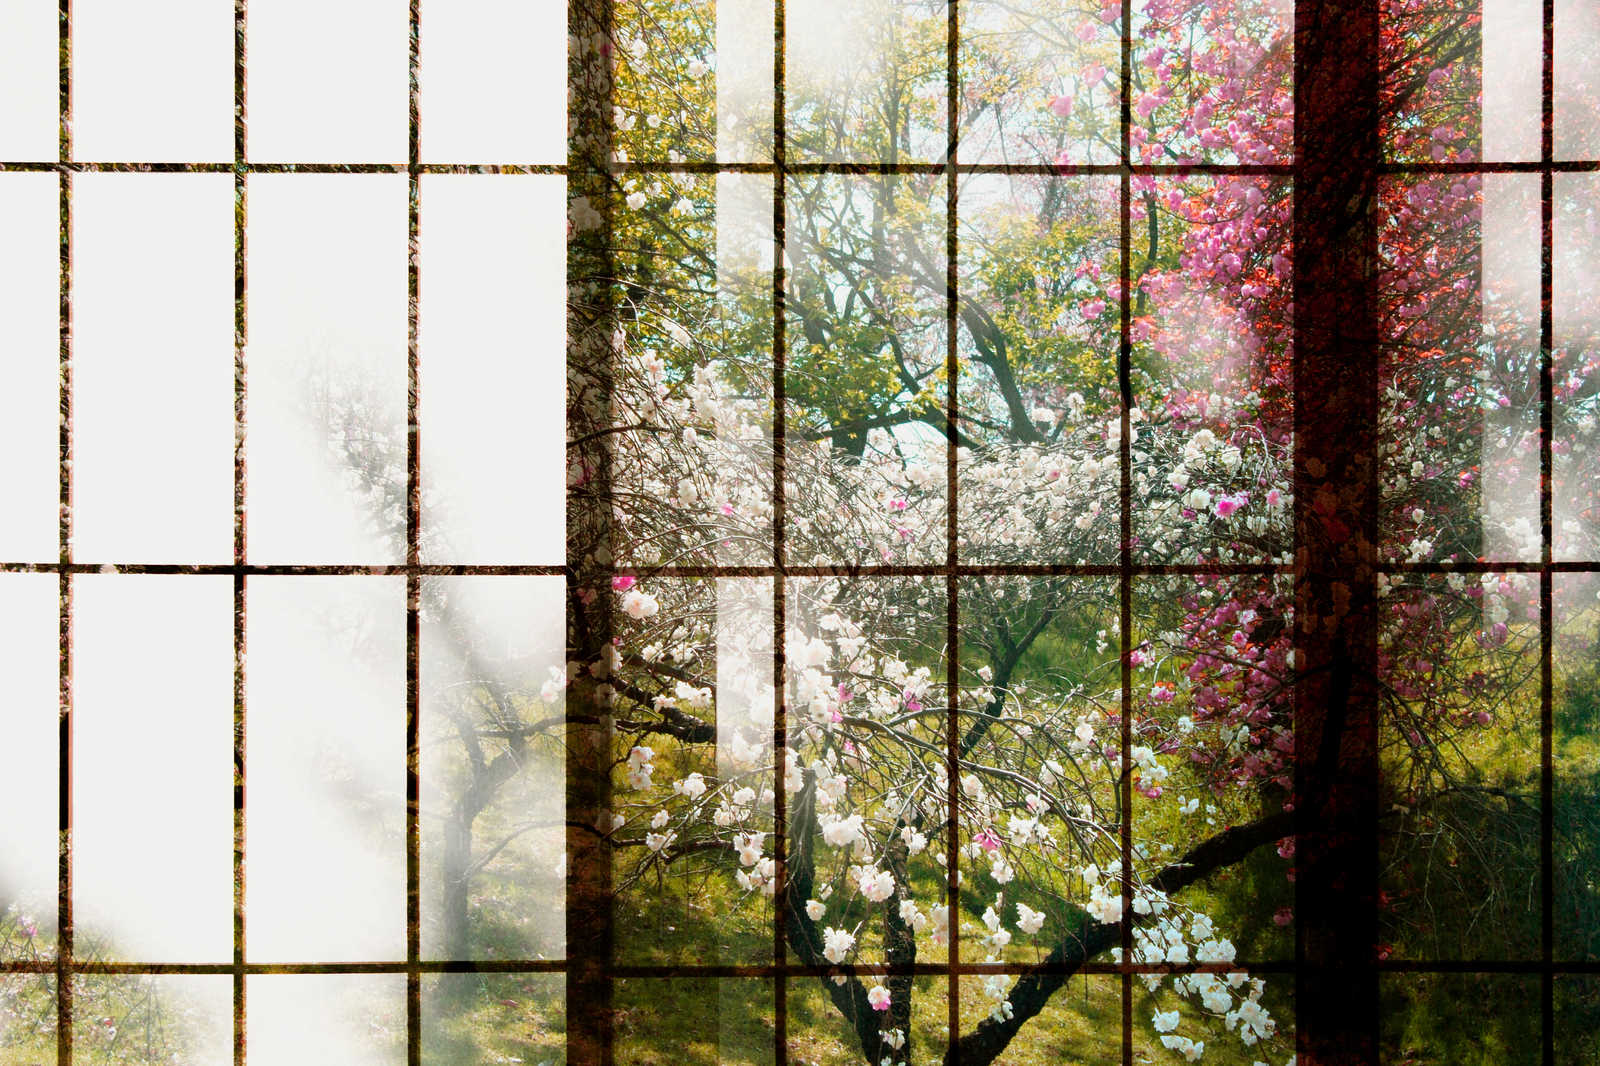             Orchard 1 - Leinwandbild, Fenster mit Garten Ausblick – 0,90 m x 0,60 m
        